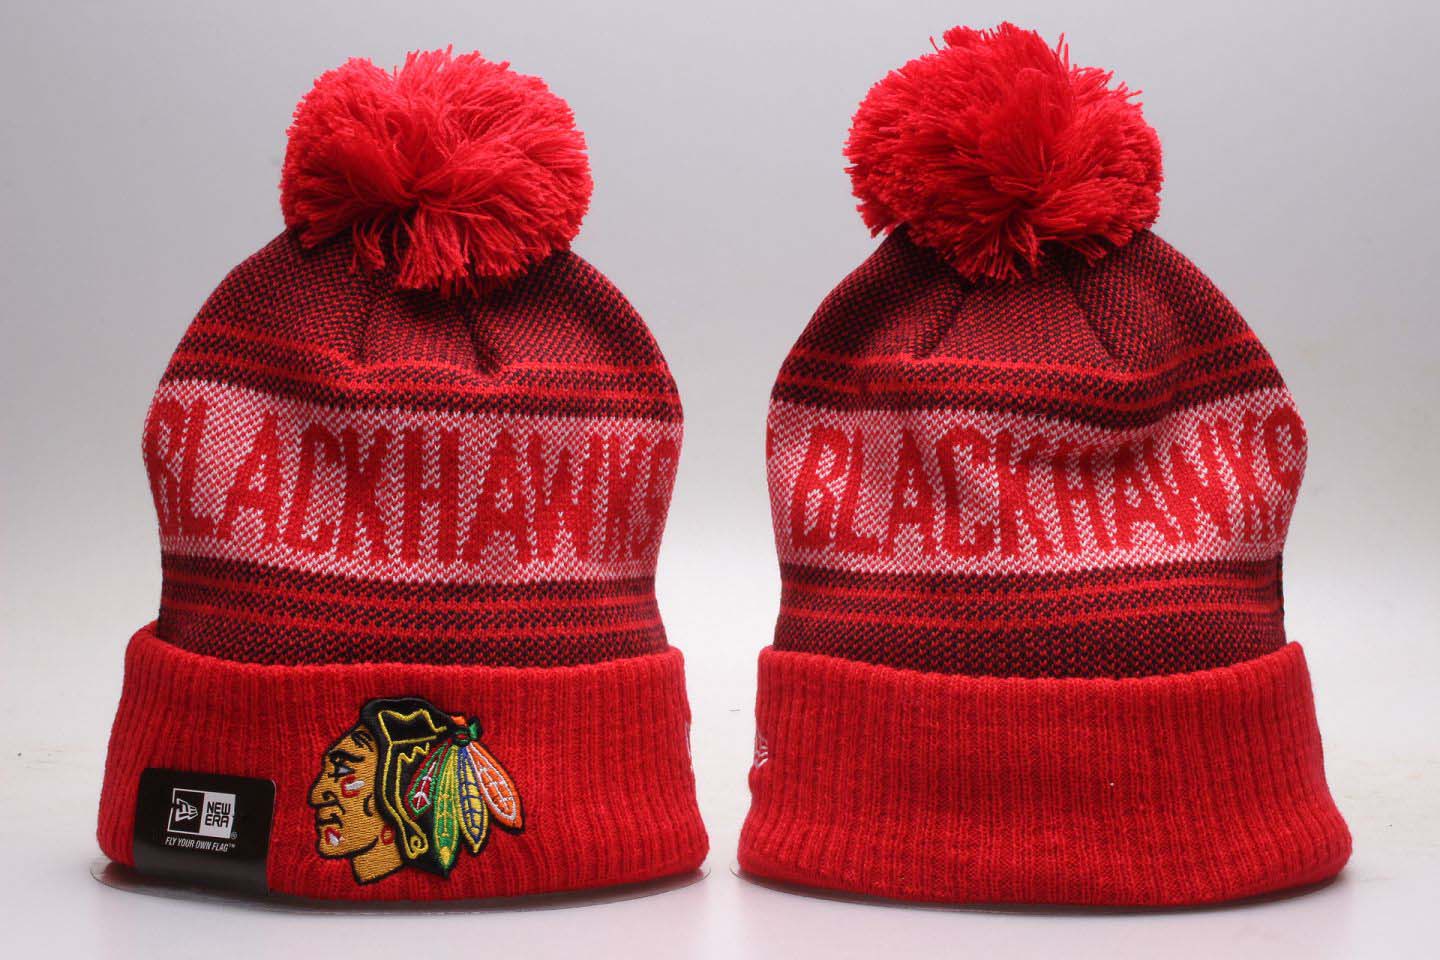 Blackhawks Team Logo All Red Knit Hat YP